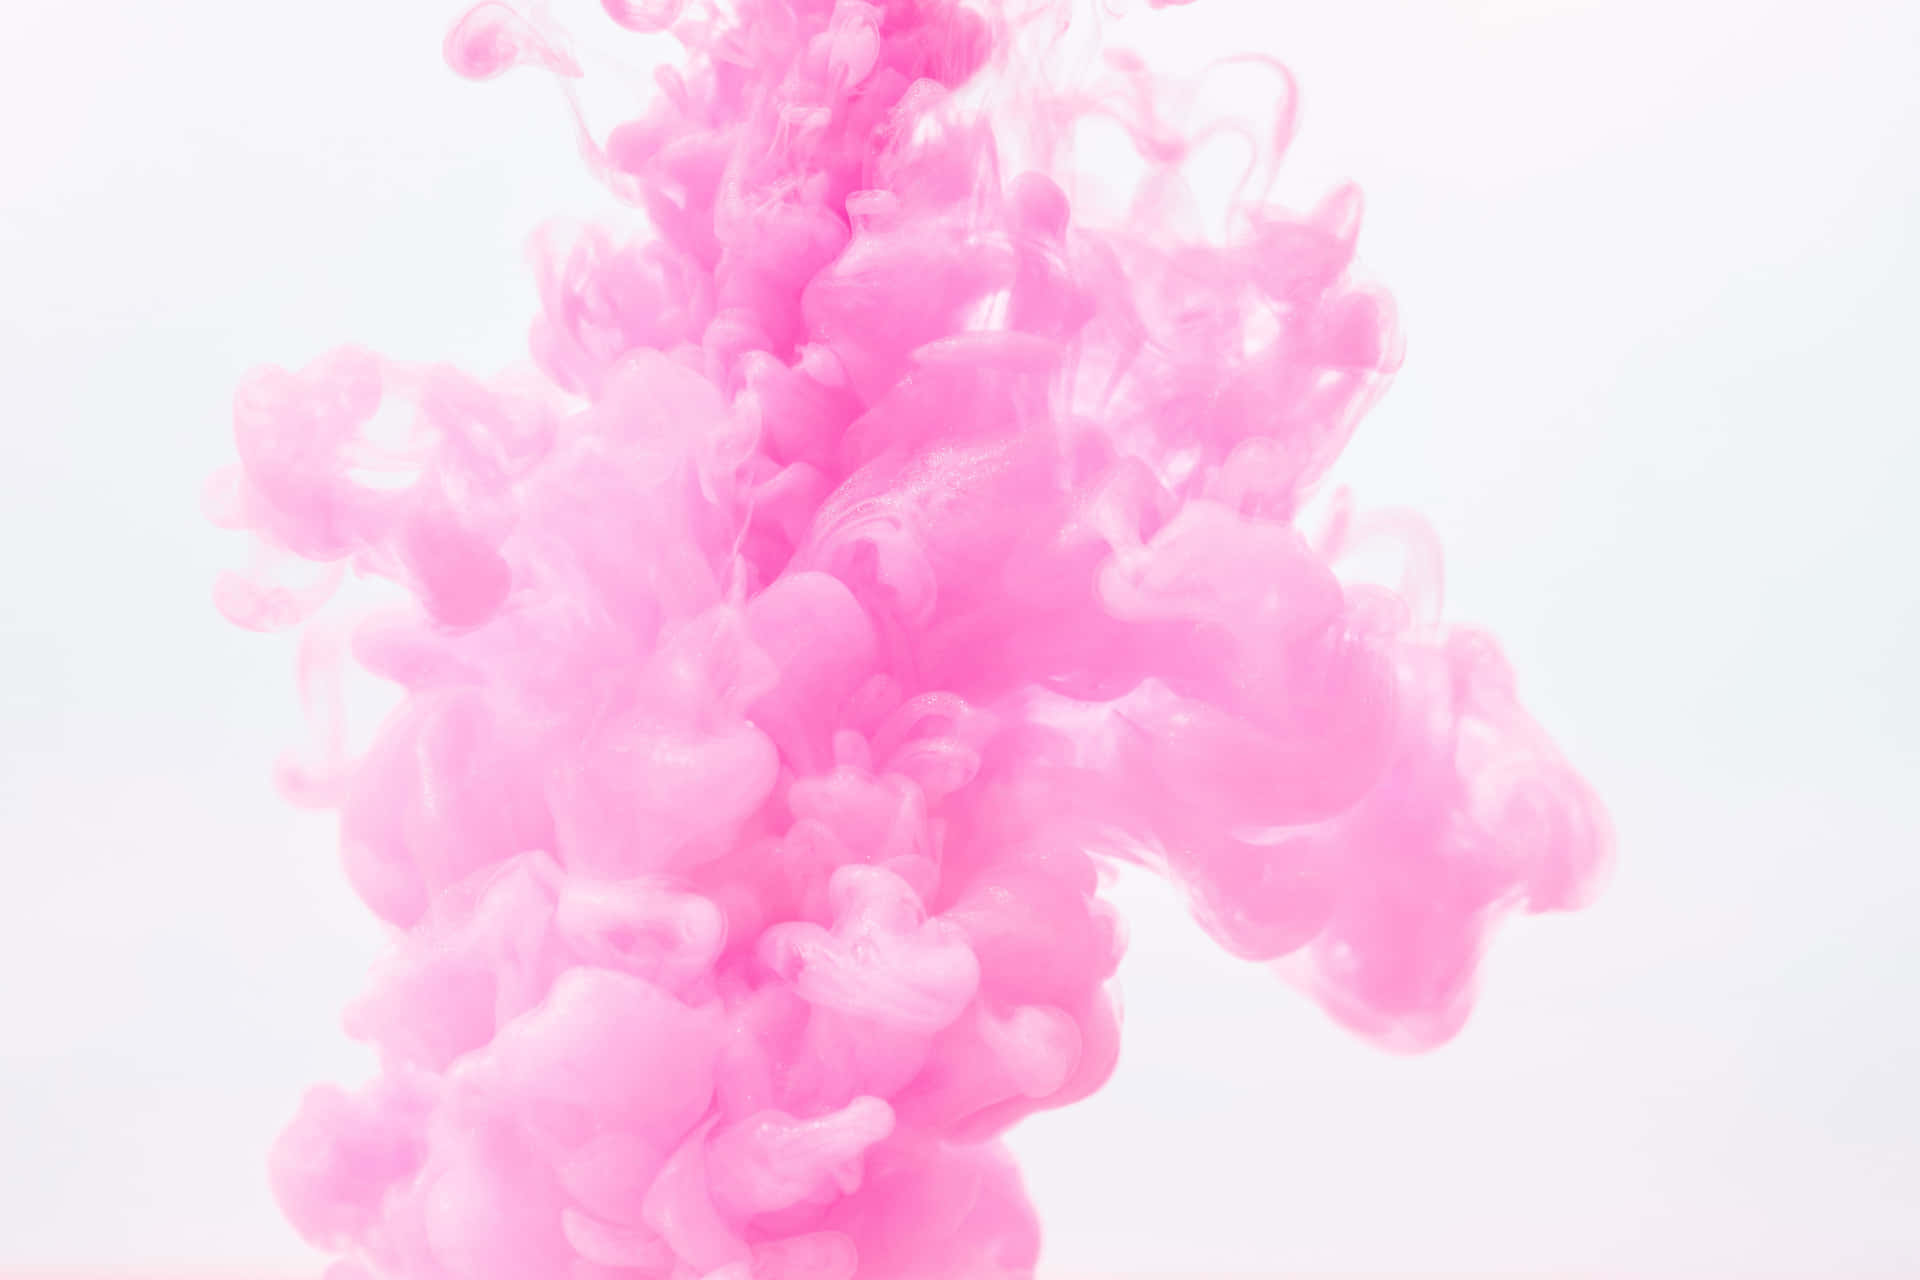 Pink Liquid In The Air Wallpaper